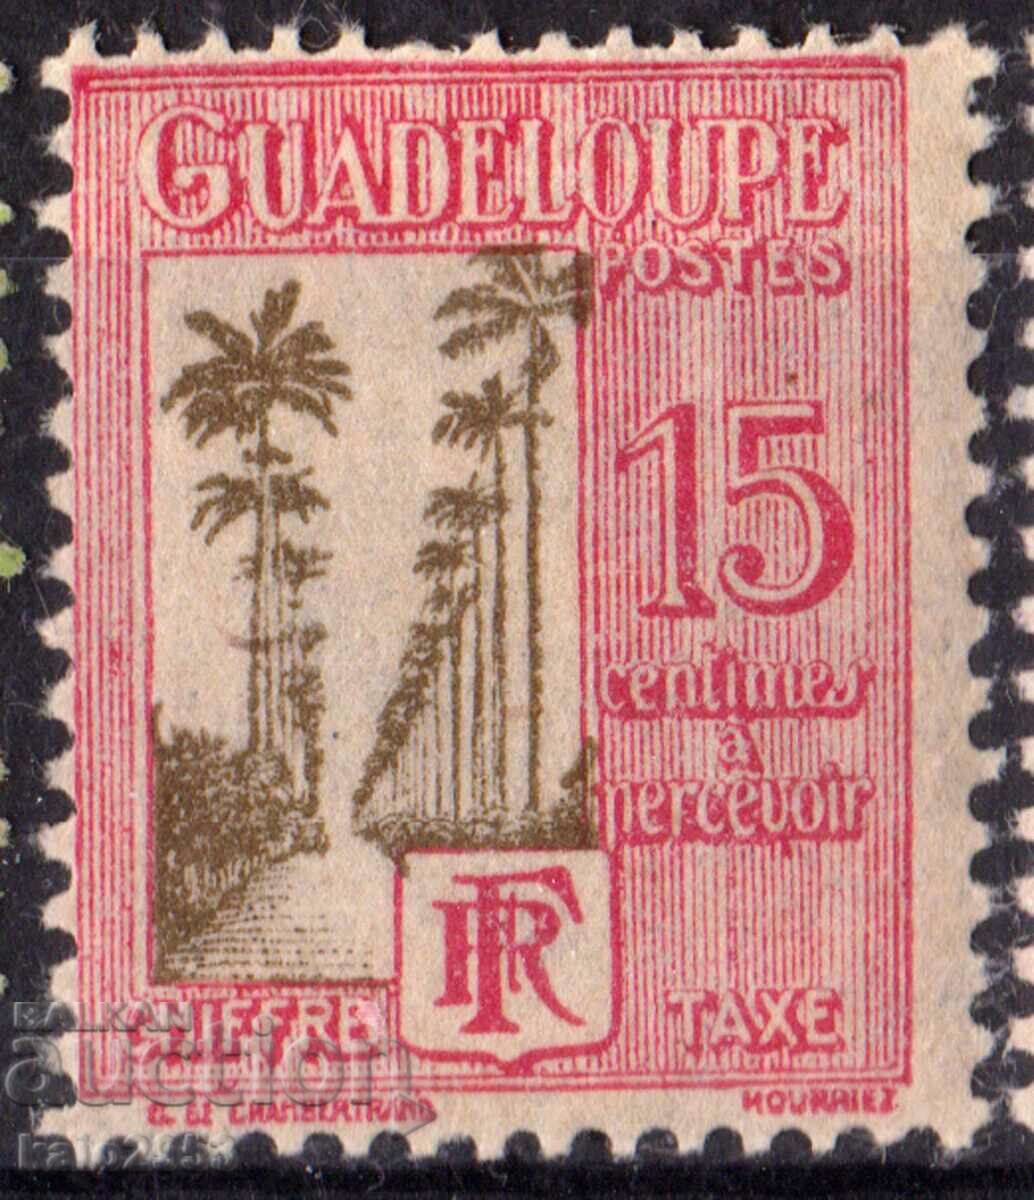 Franse/Guadeloupe-1928-Plată suplimentară-palm avenue, MLH